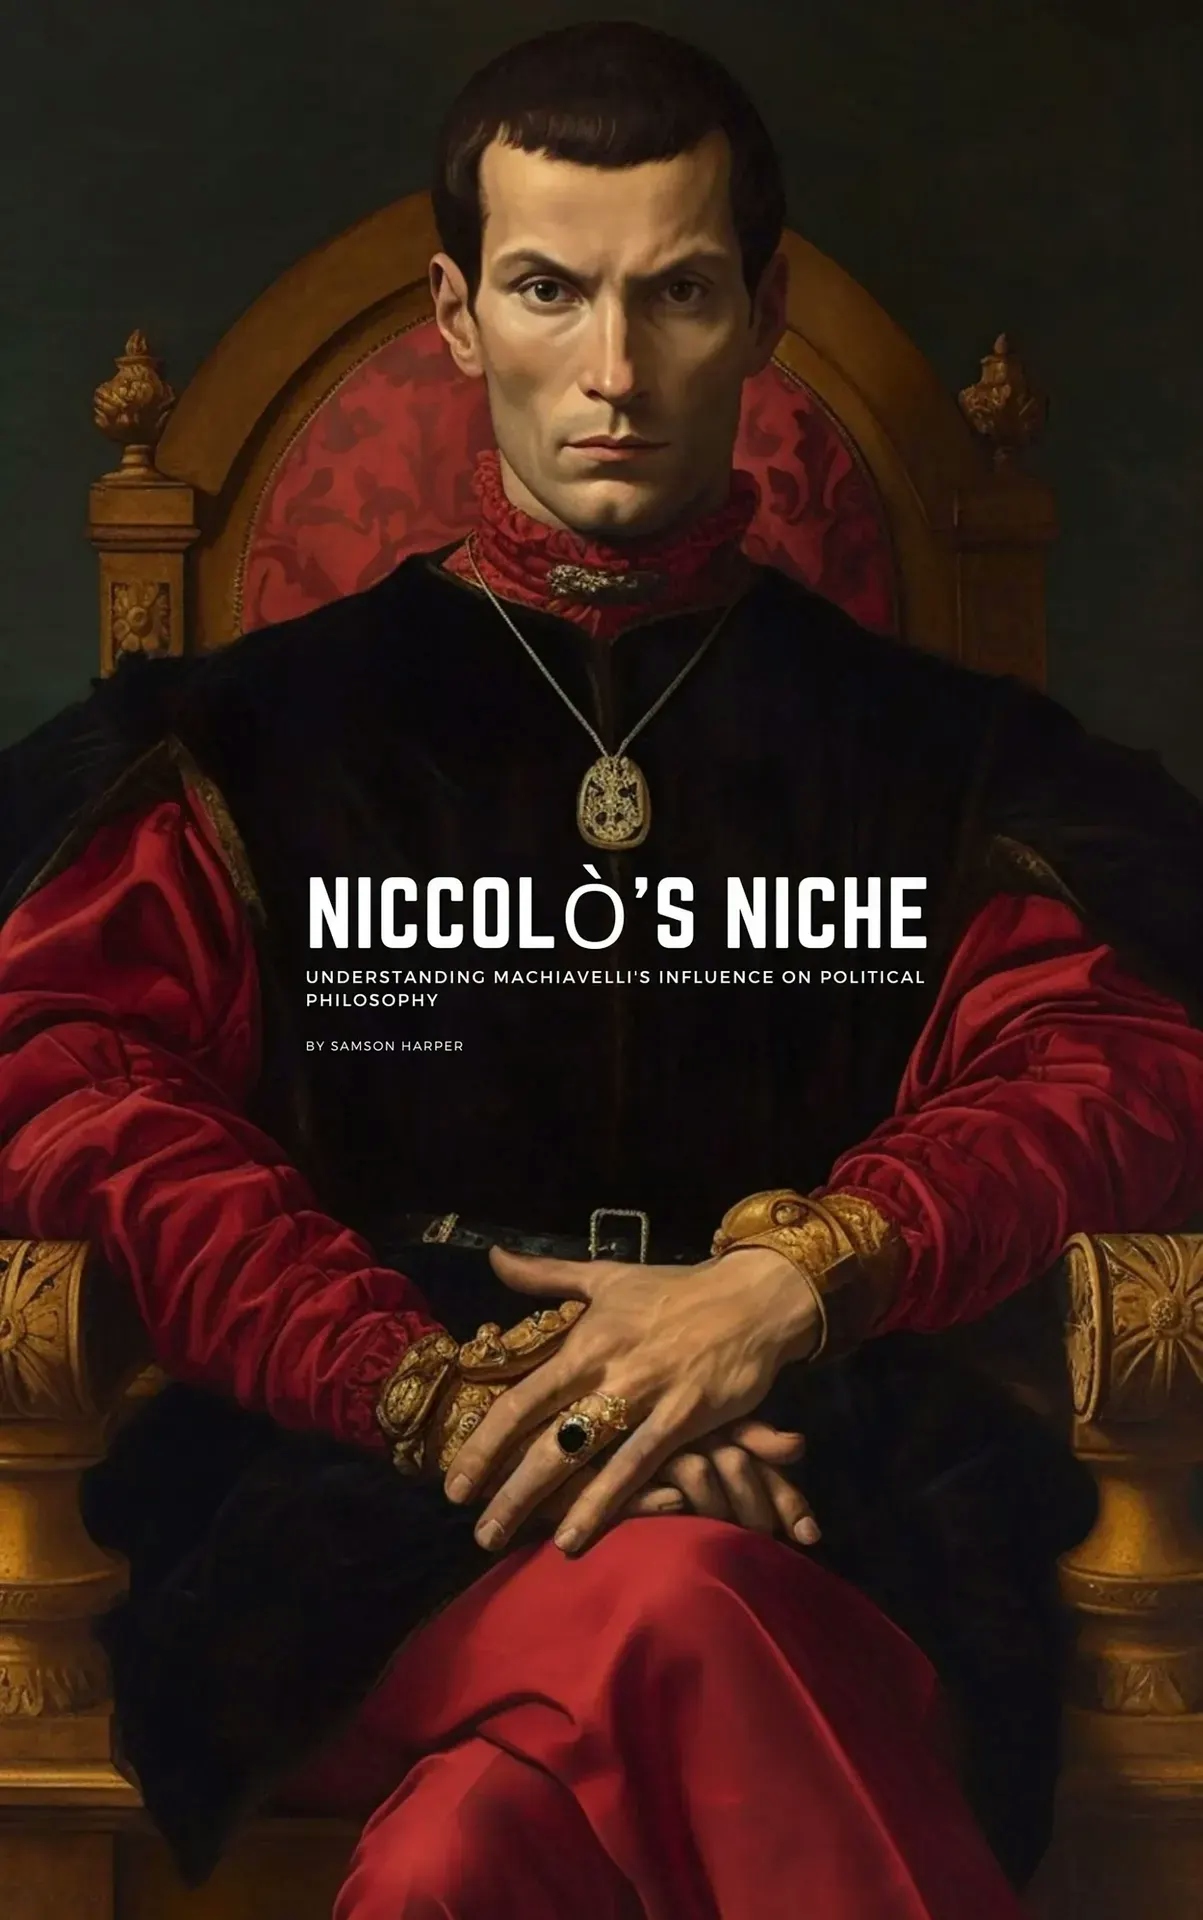 Niccolò's Niche: Unlocking Machiavelli's Political Philosophy